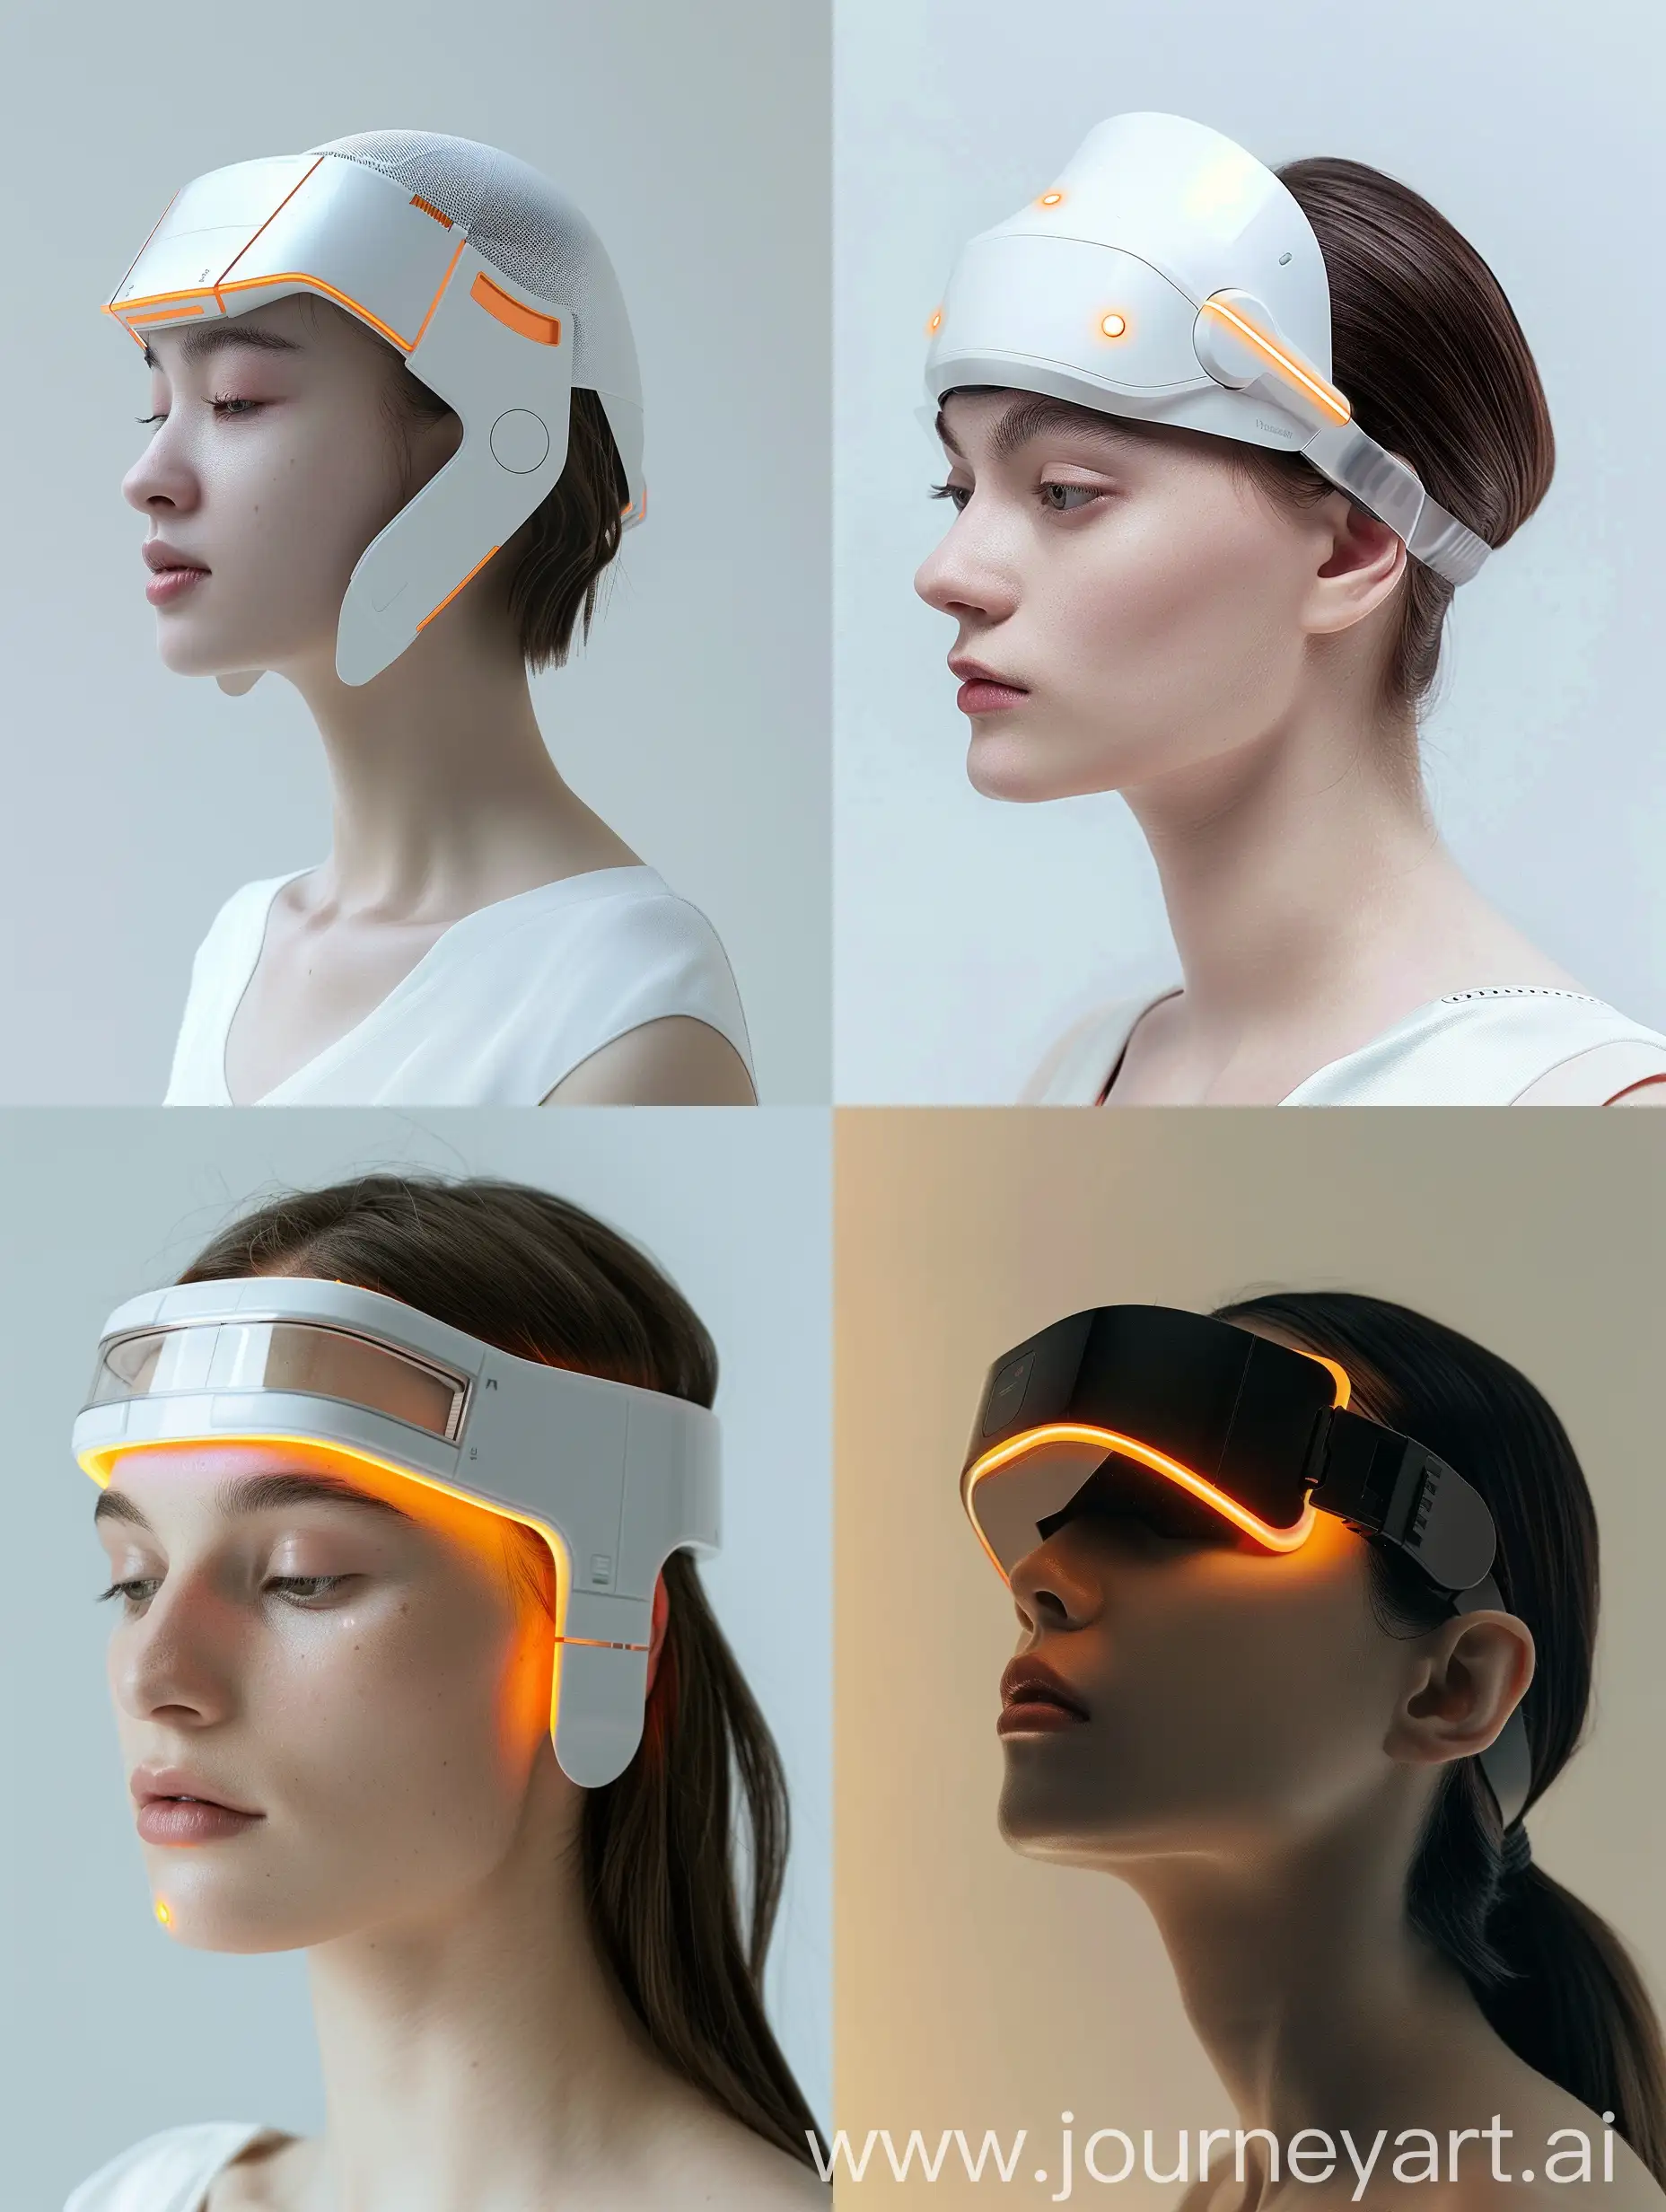 Modern-Laser-Therapy-Headgear-Portable-Technology-for-Enhanced-Wellness